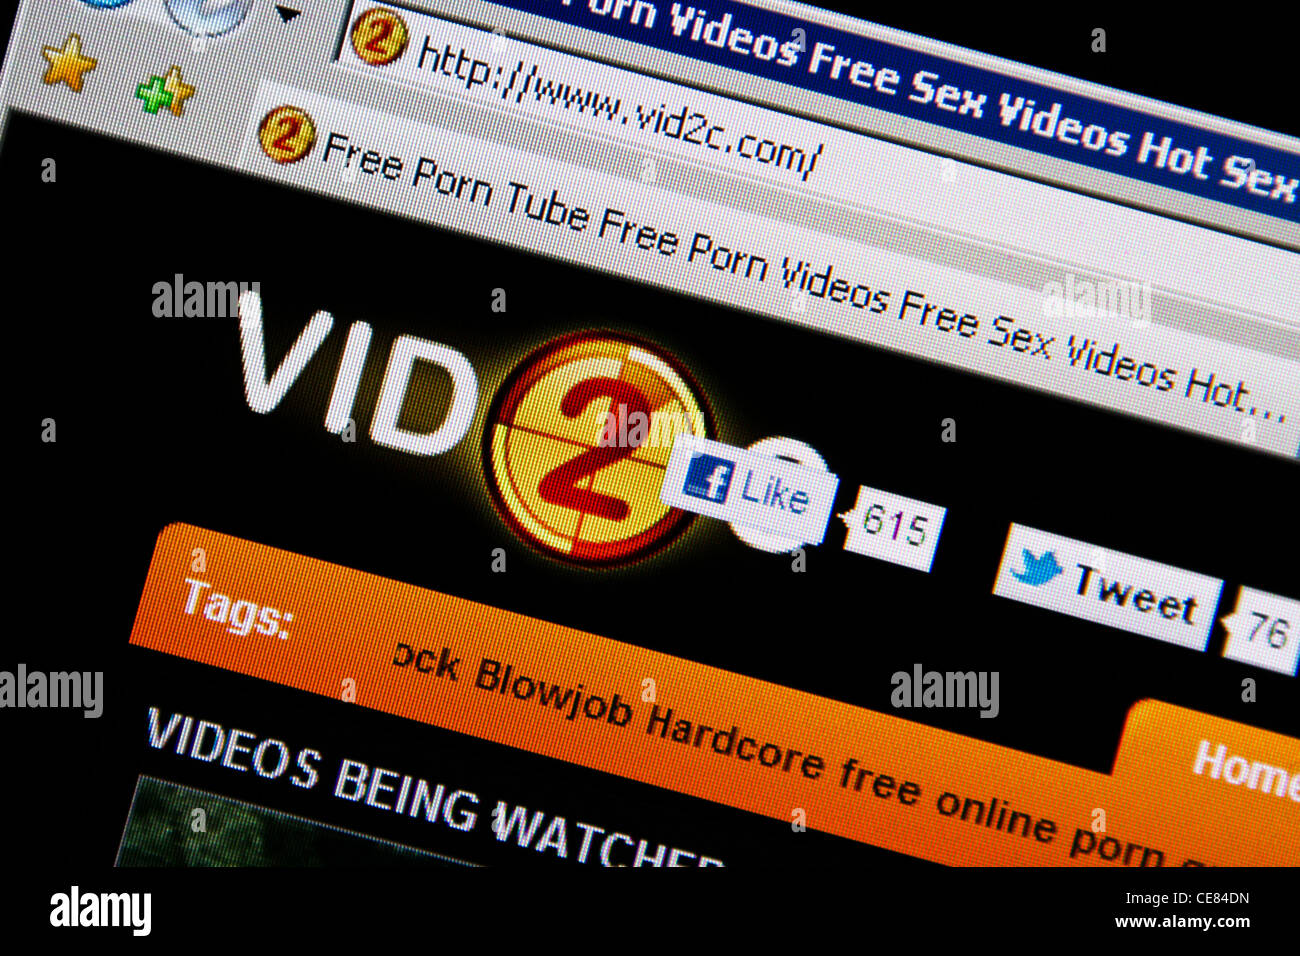 sex video movie online website vid2c Stock Photo image